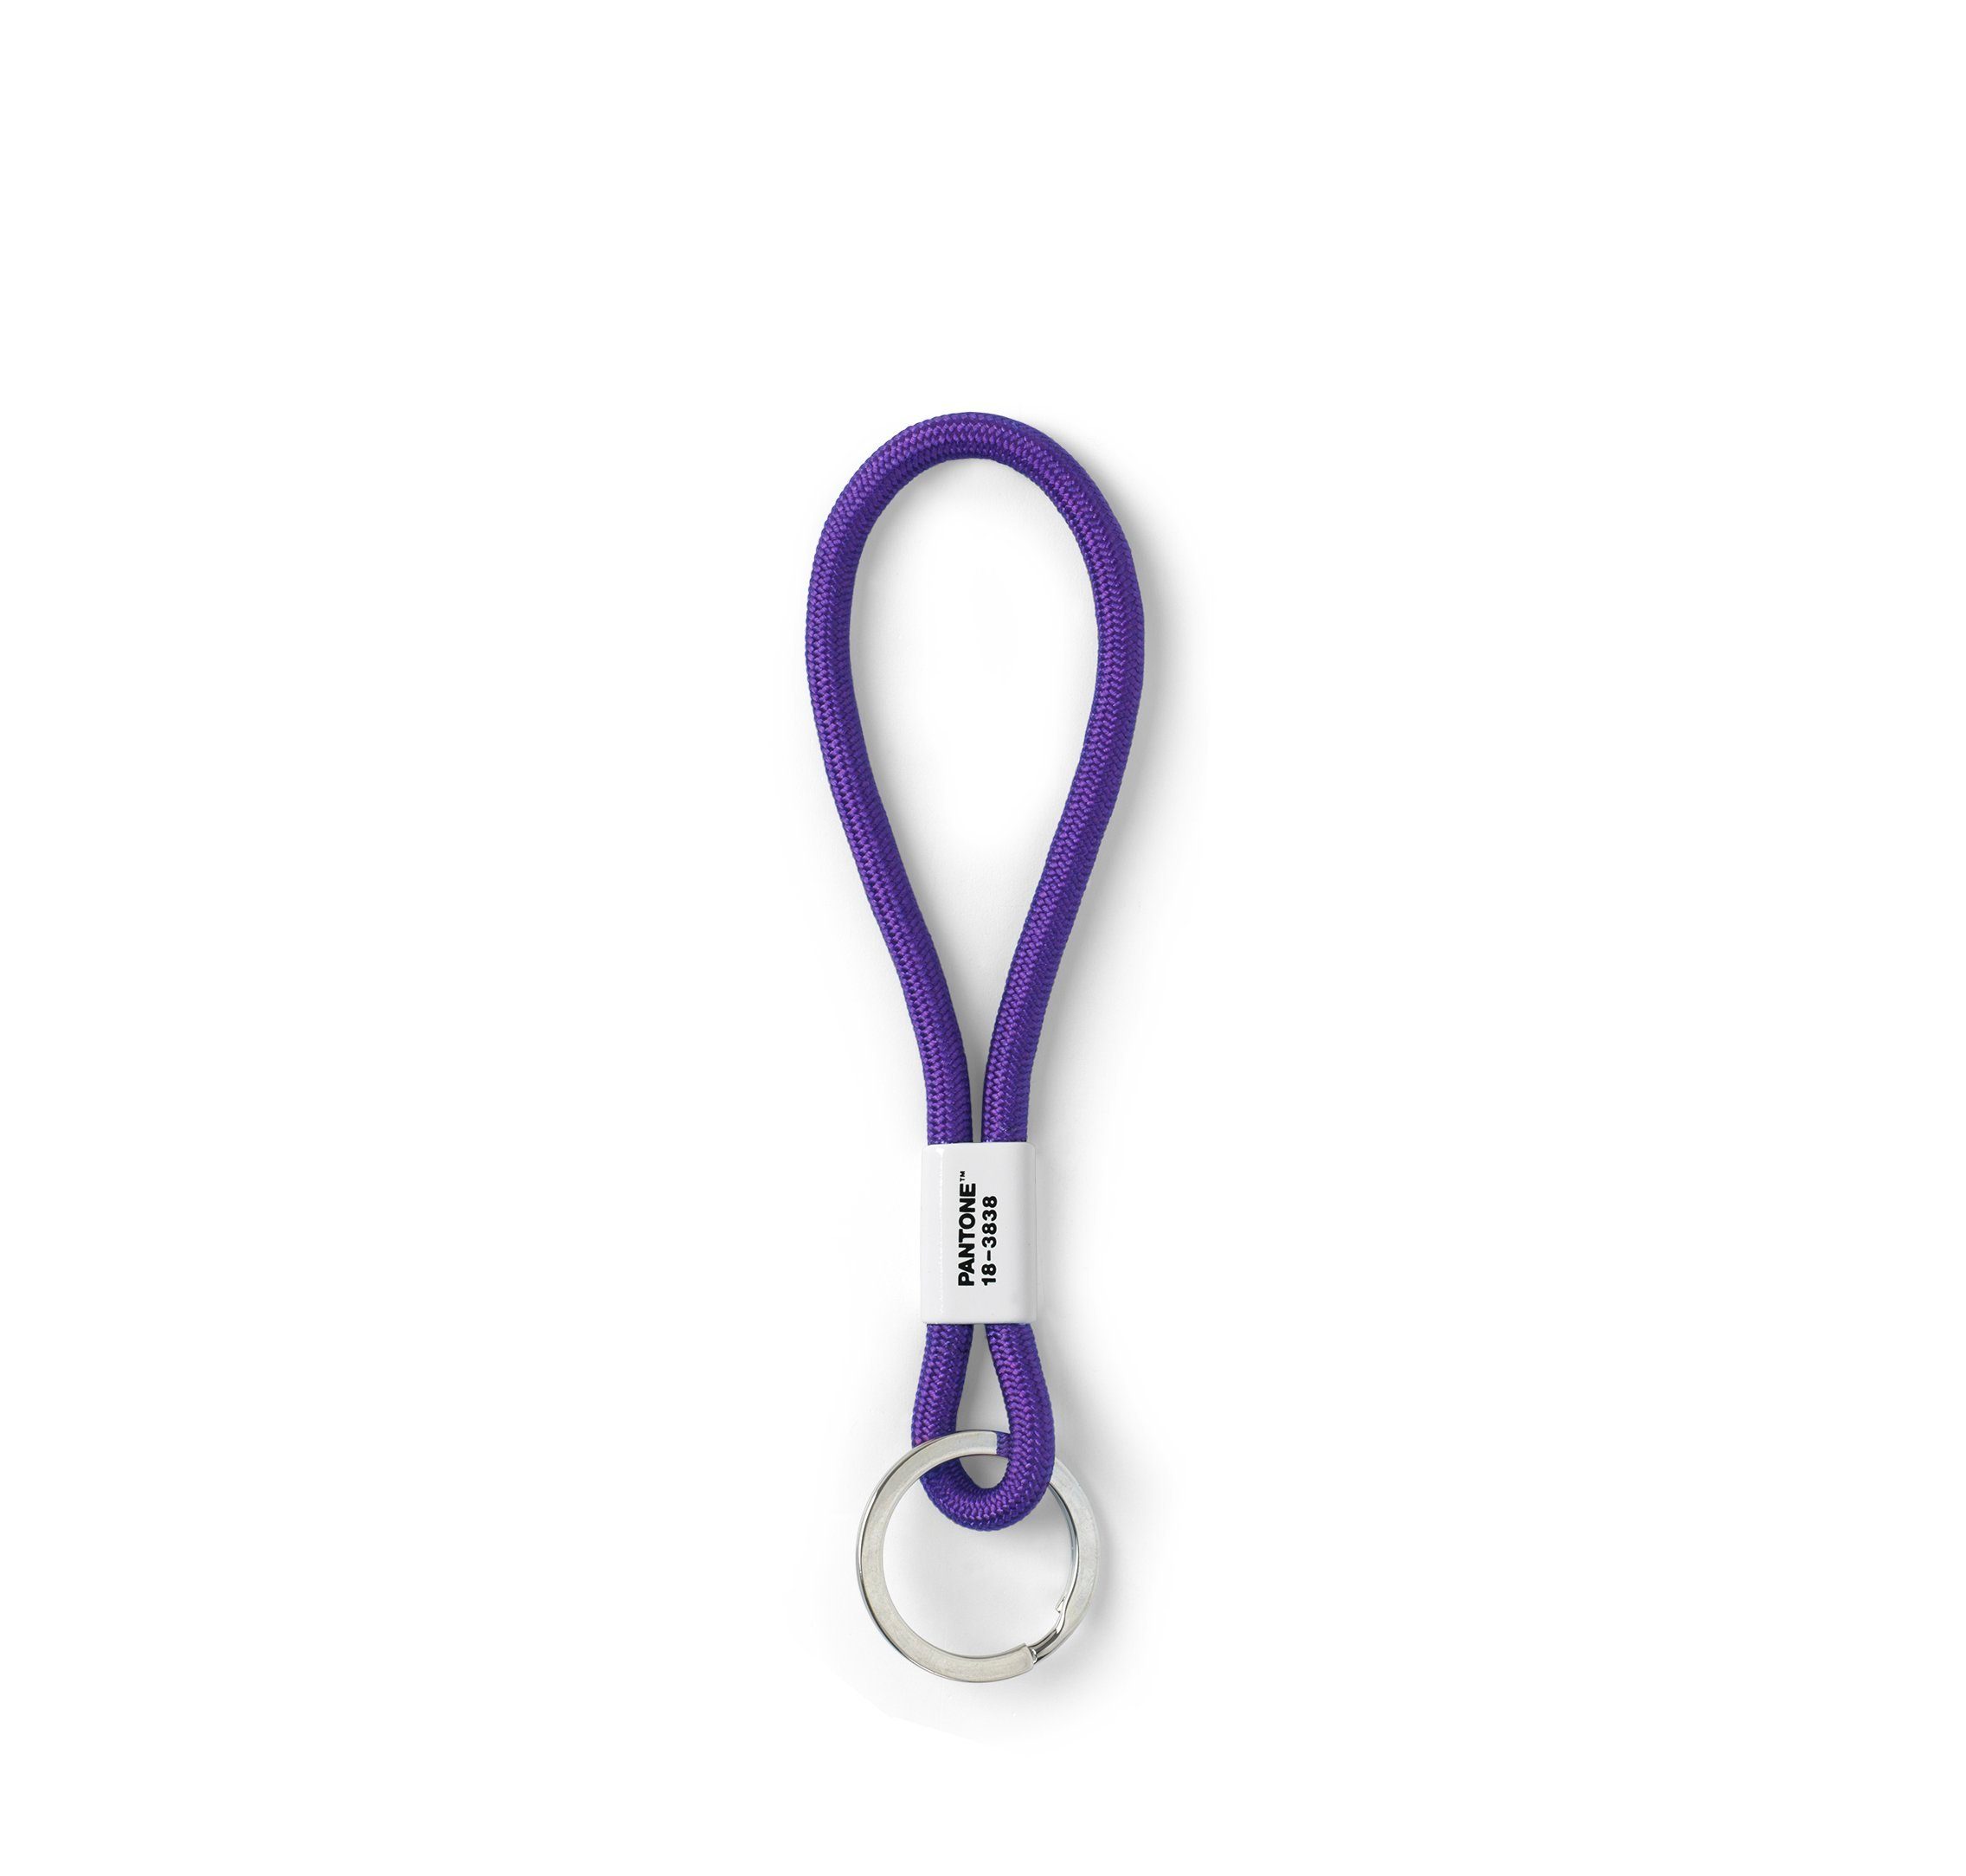 PANTONE Schlüsselanhänger, Design- Schlüsselband, Key Chain, kurz Ultra Violet 18-3838